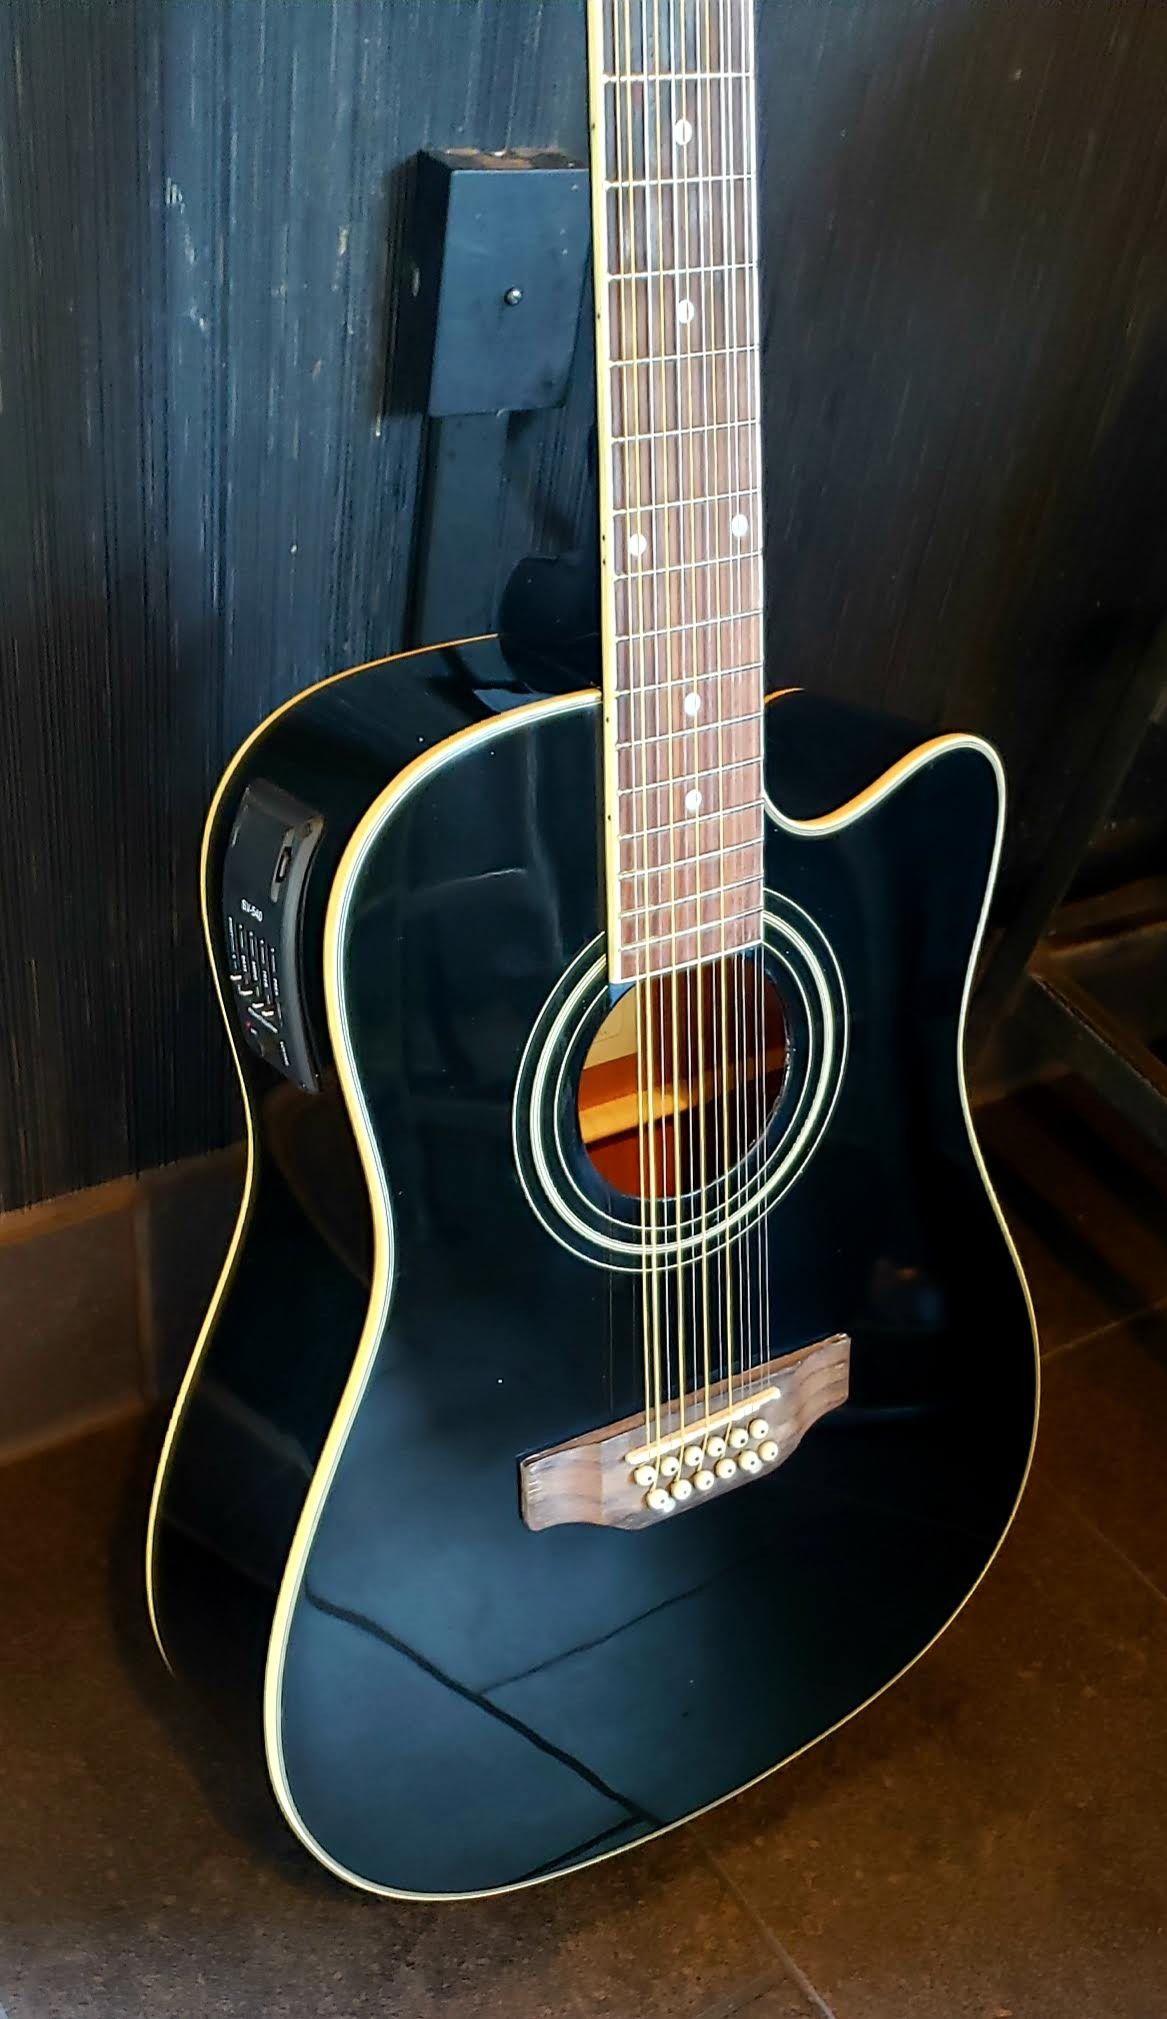 New Black 12 String Requinto Guitar Combo with Gig Bag and accessories. Guitarra Requinto Negro Cutaway con accesorios y Bolsa.